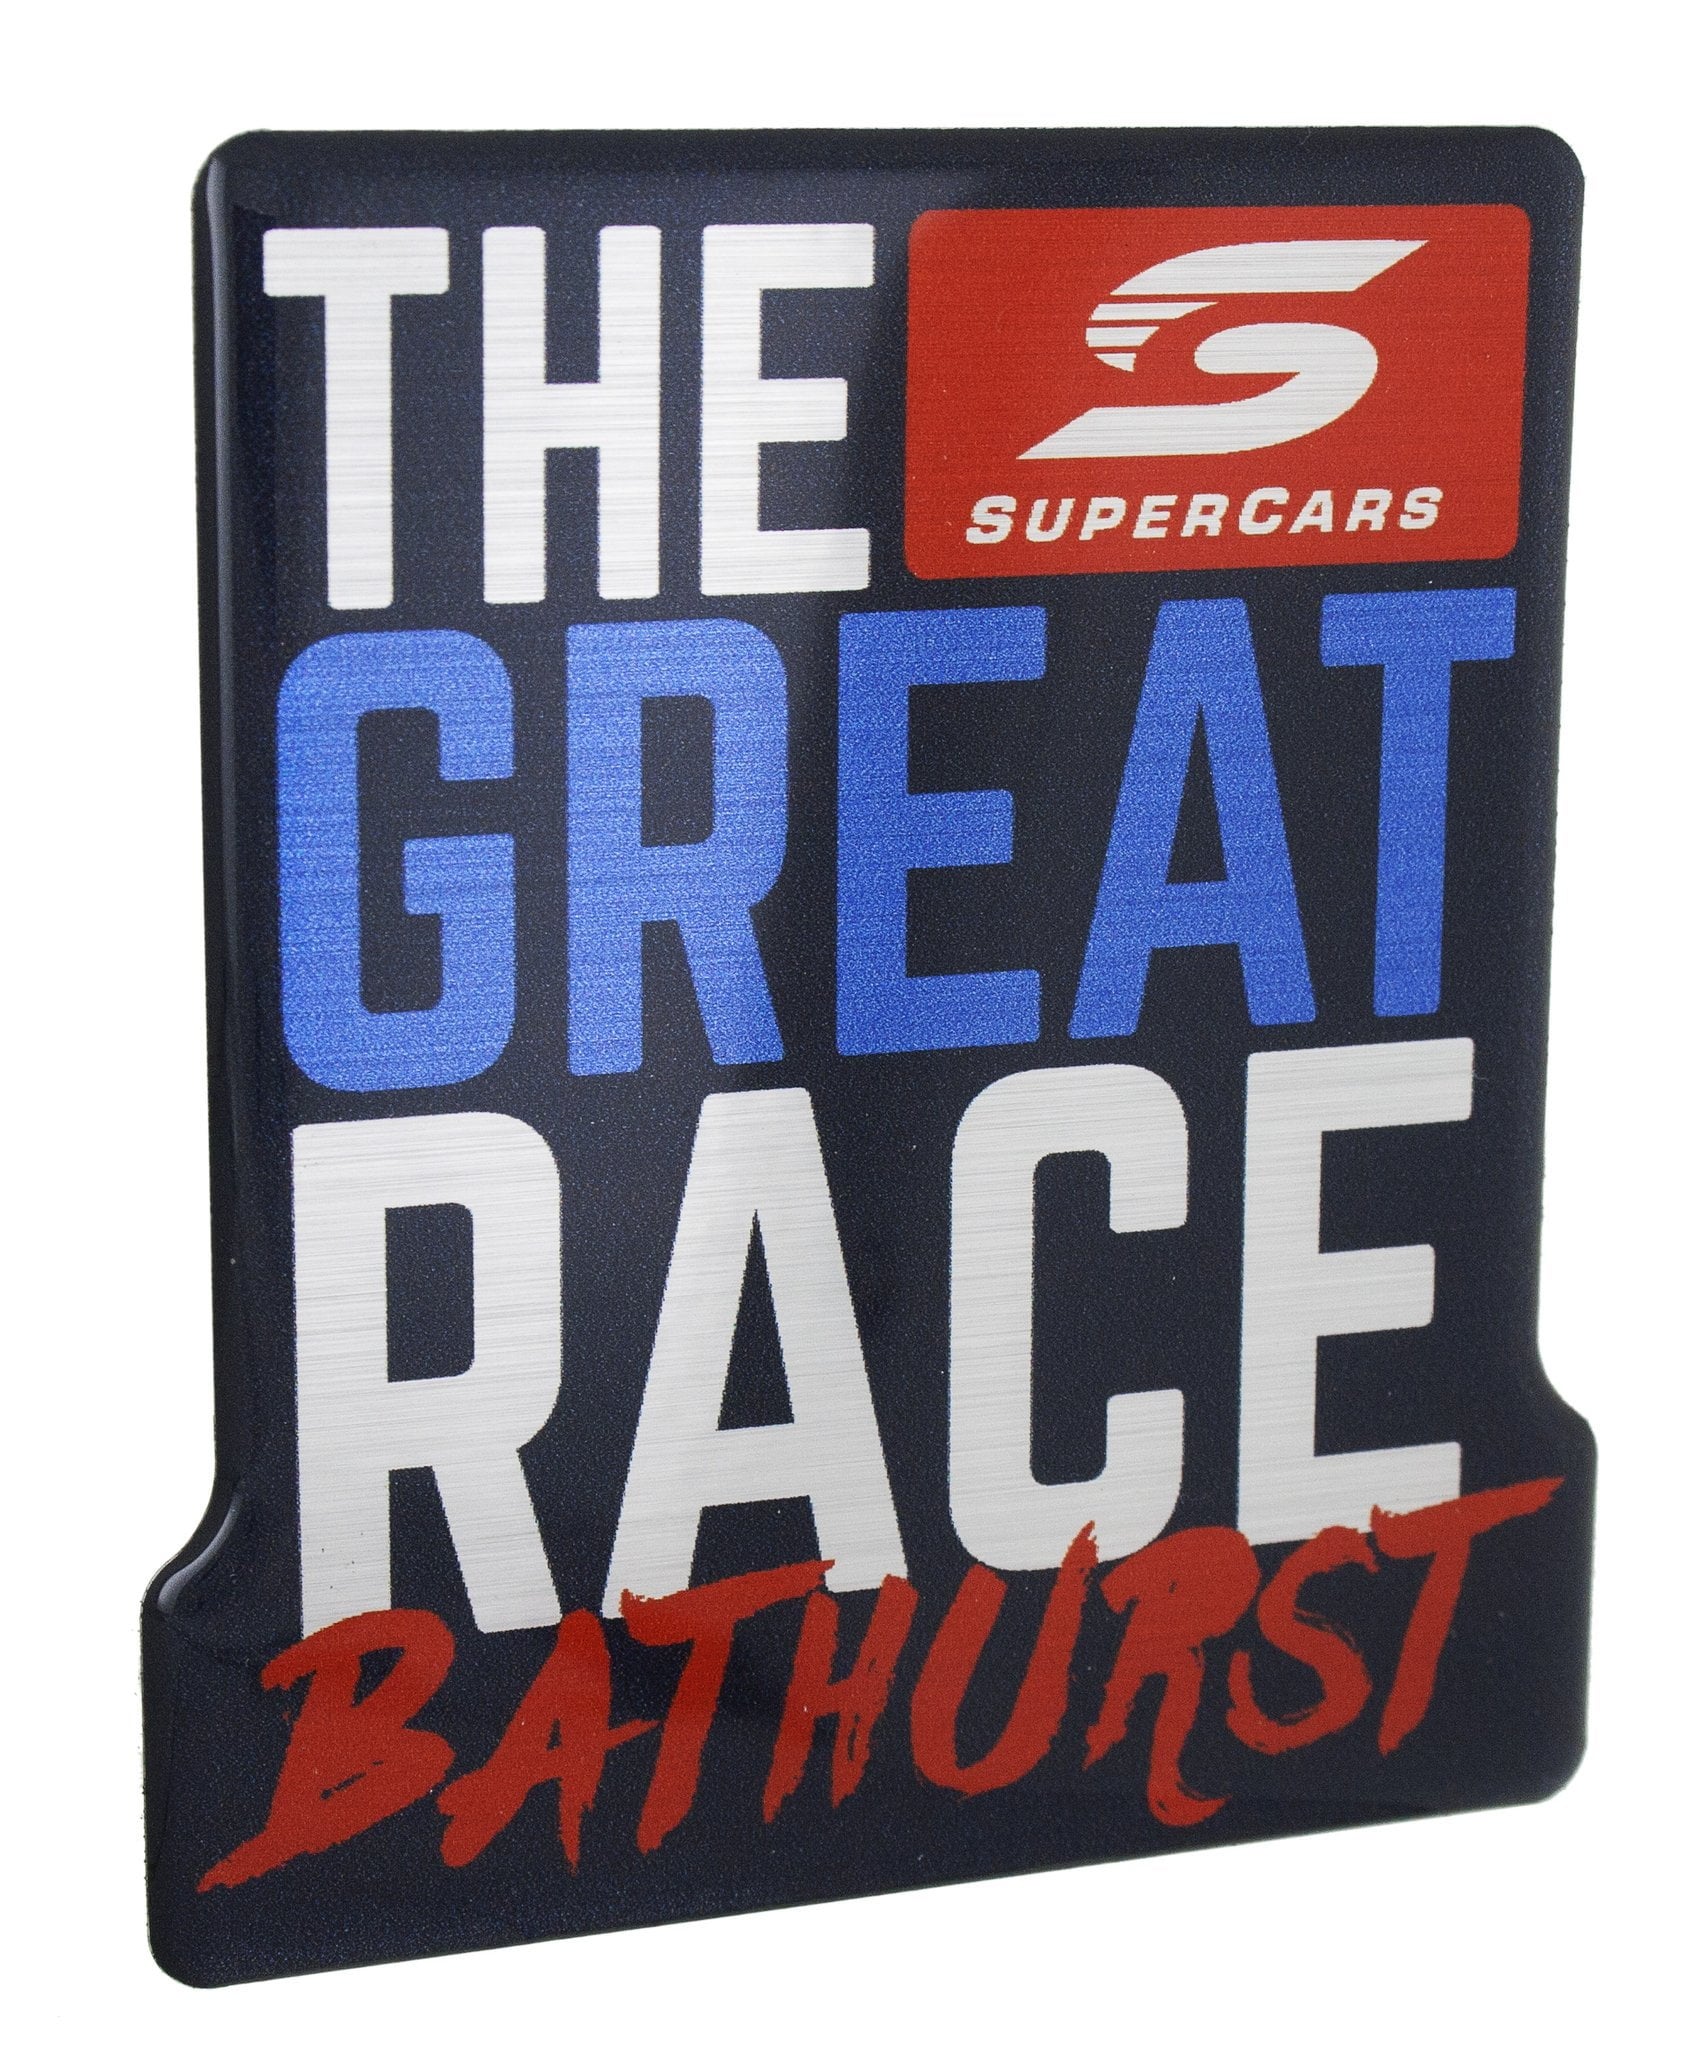 V8 Supercars Bathurst The Great Race Logo Domed Automotive Decal Emblem Sticker